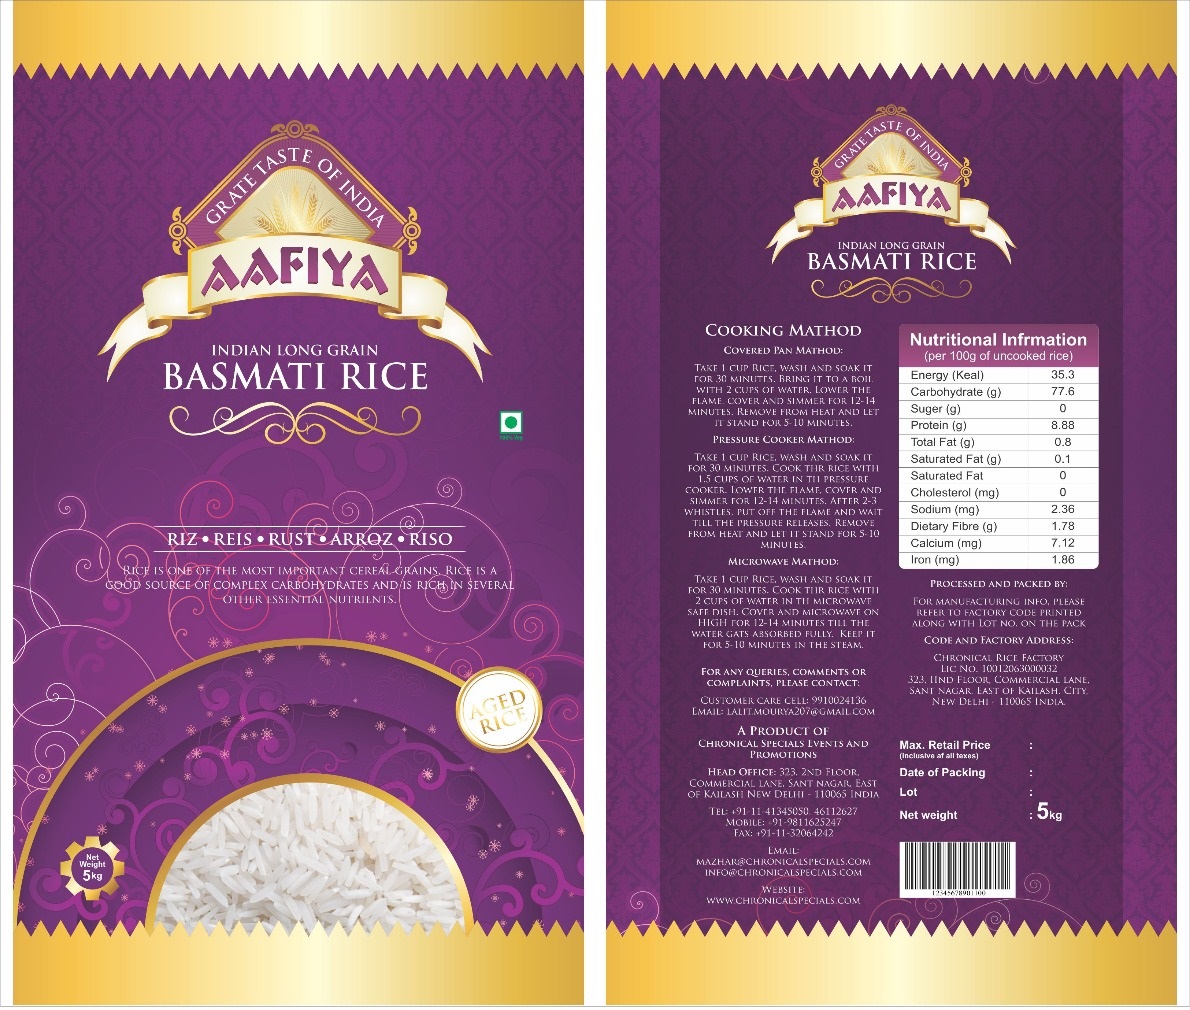 Our Basmati Rice Brands